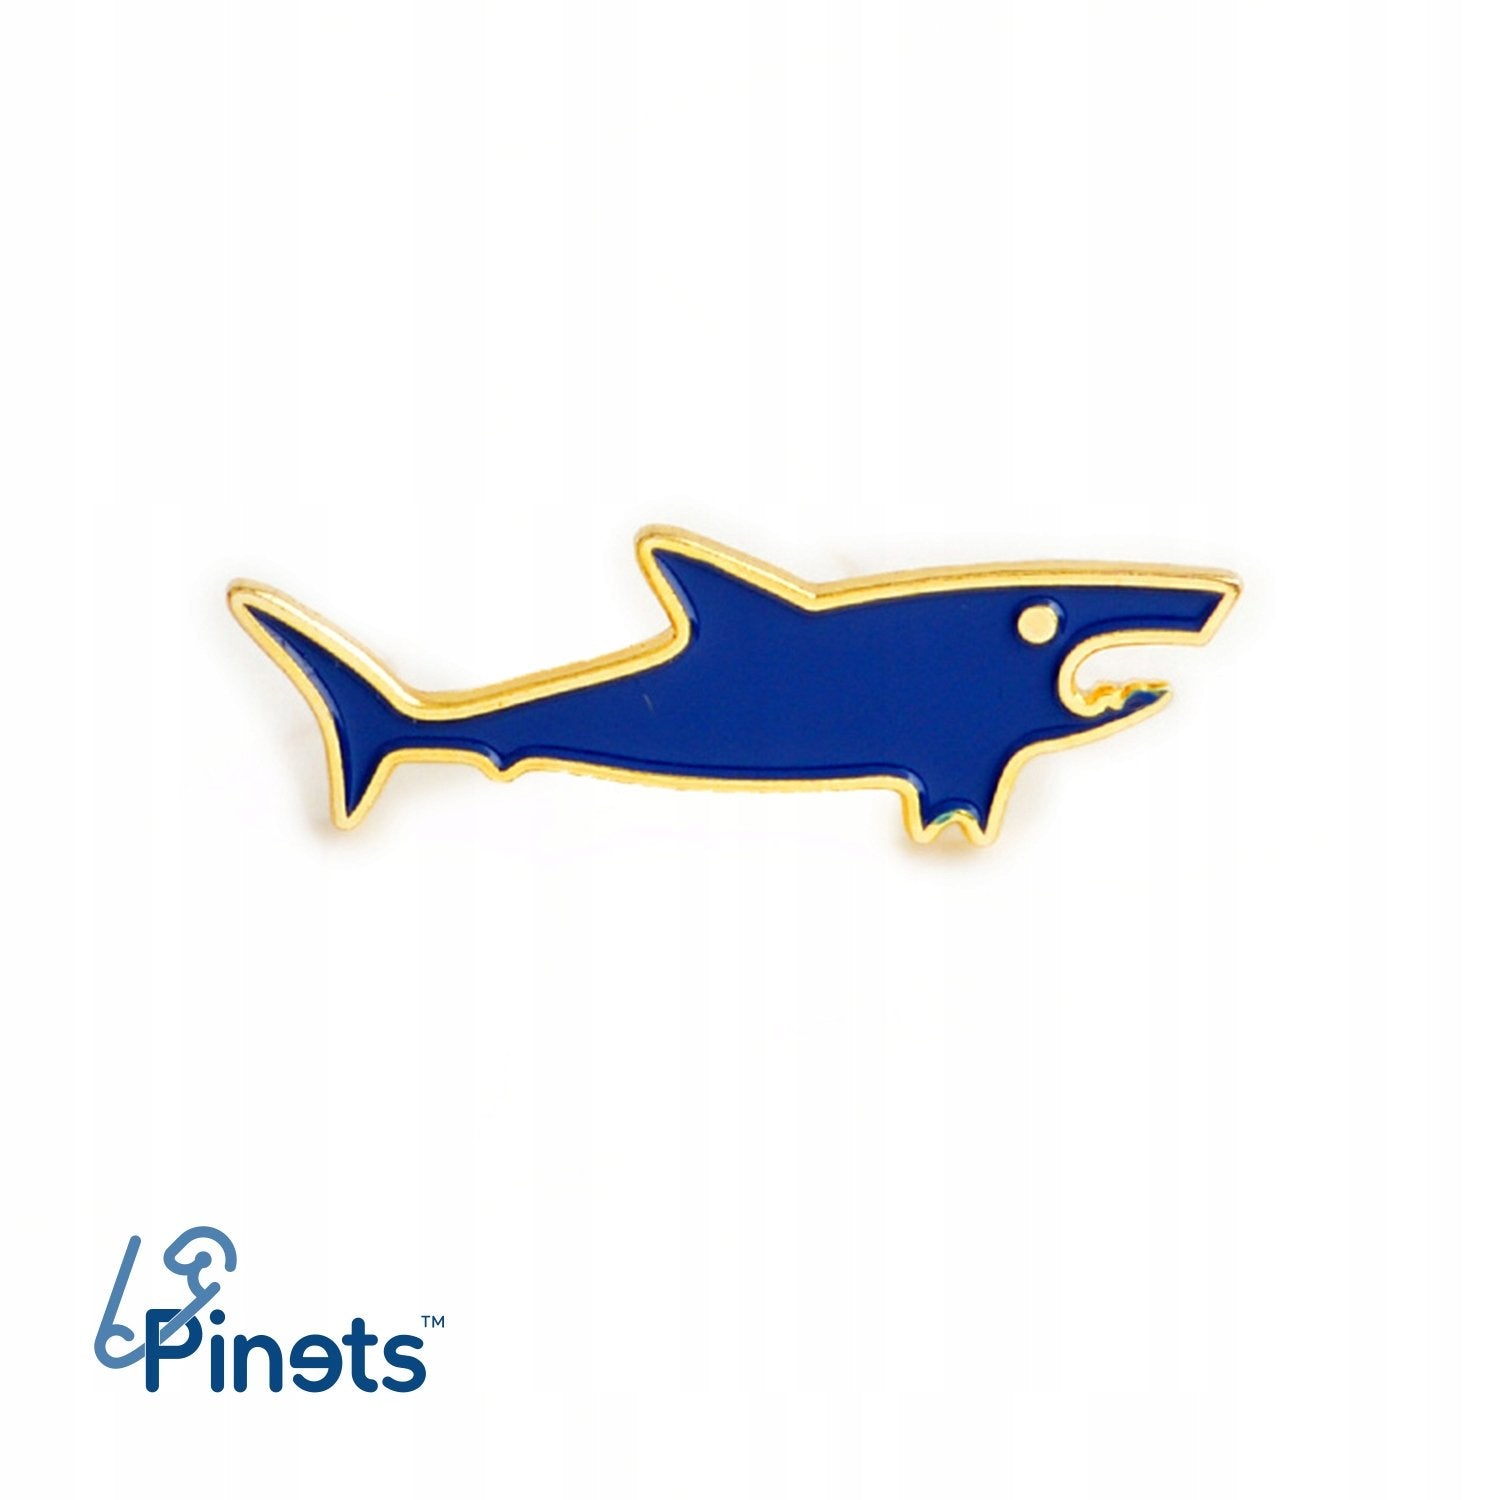 Rekin morska przypinka - Pinets Polska